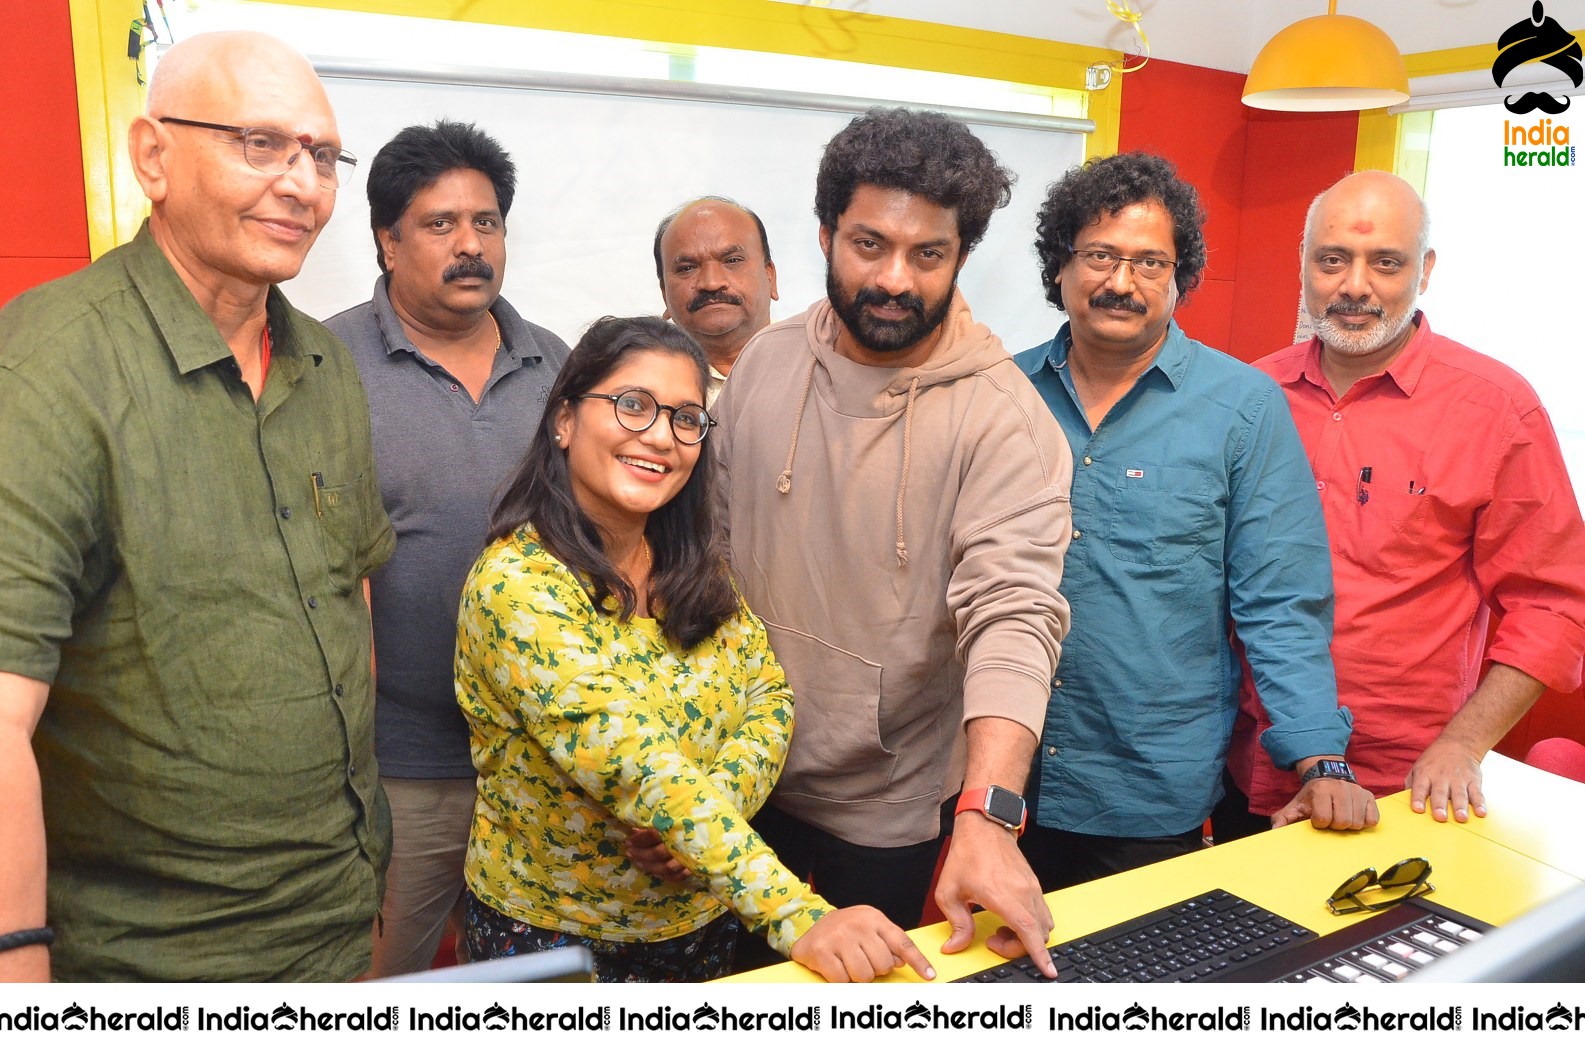 More Photos of Entha Manchivadavura Team at Radio Mirchi Hyderabad Set 2